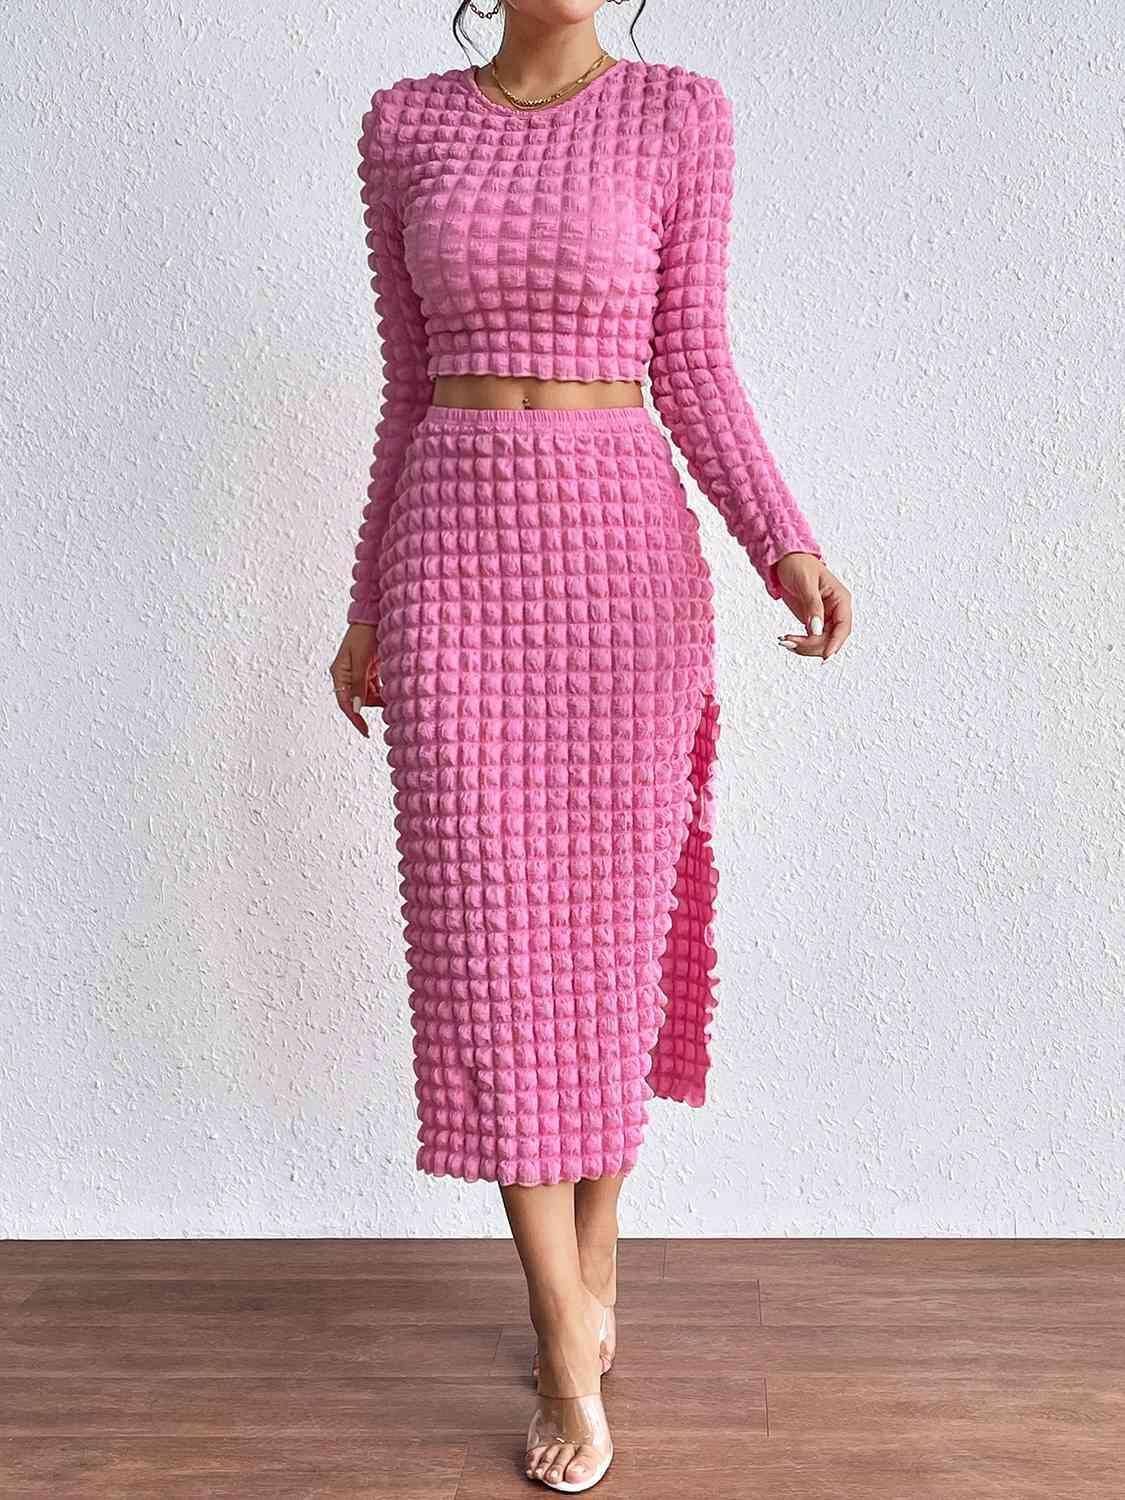 Barbie Elegance Long Sleeve Crop Top and Skirt Set - MXSTUDIO.COM